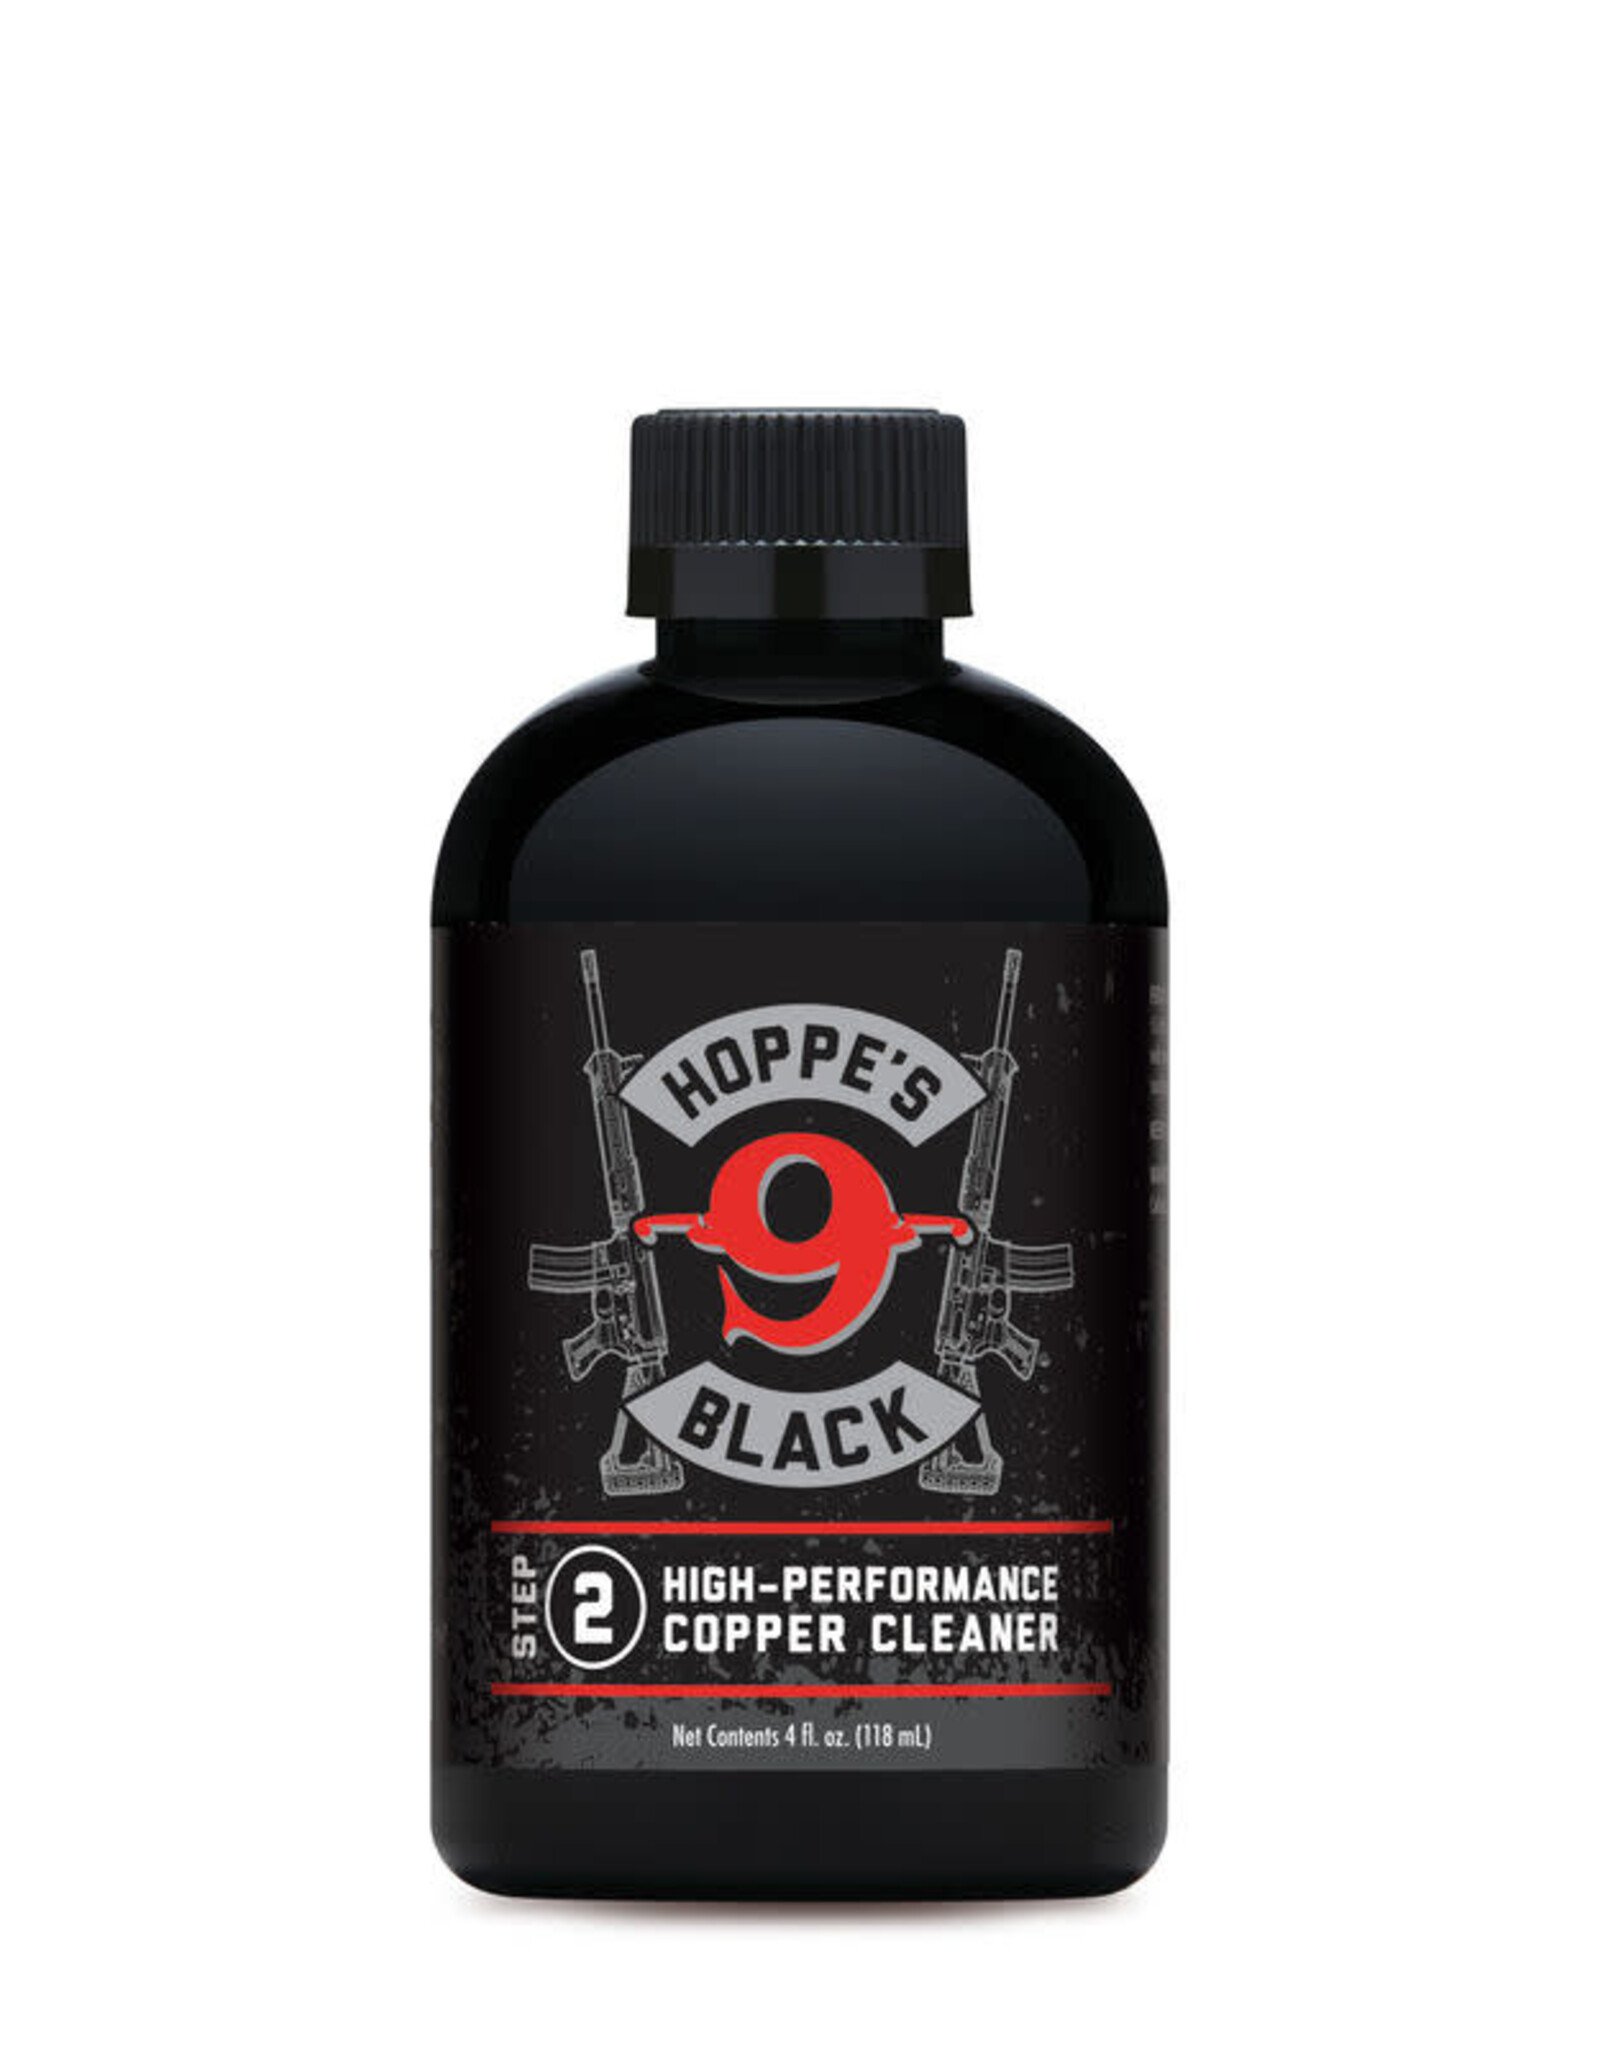 Hoppe's Black Copper Cleaner - Step 2 - 4 Oz